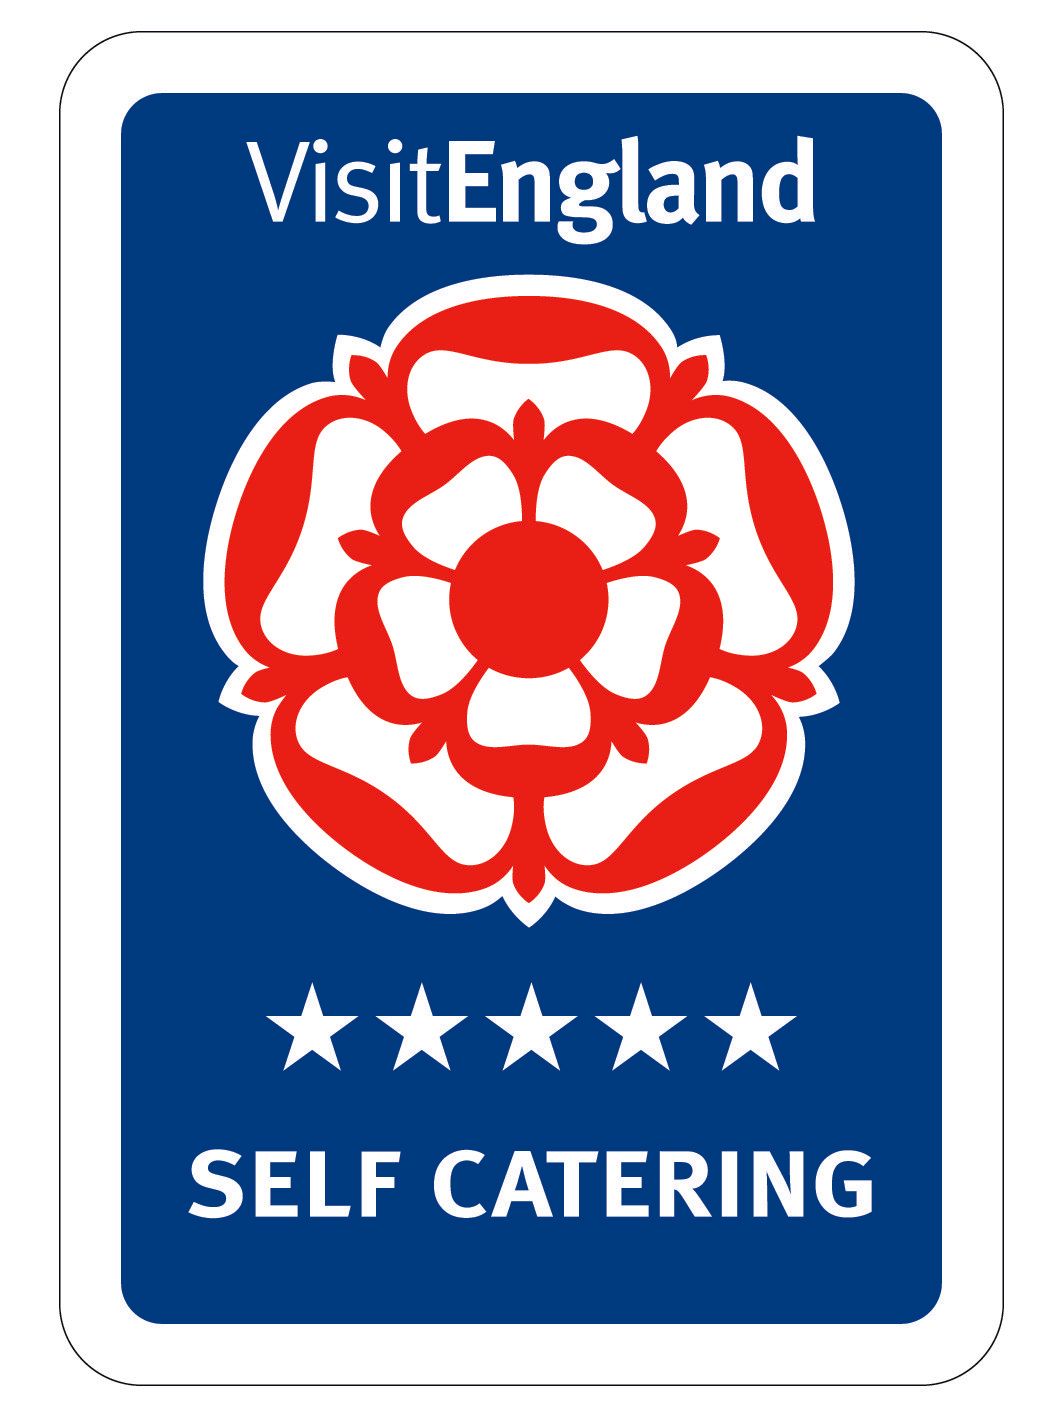 Visit England 5-Star Self-Catering Award